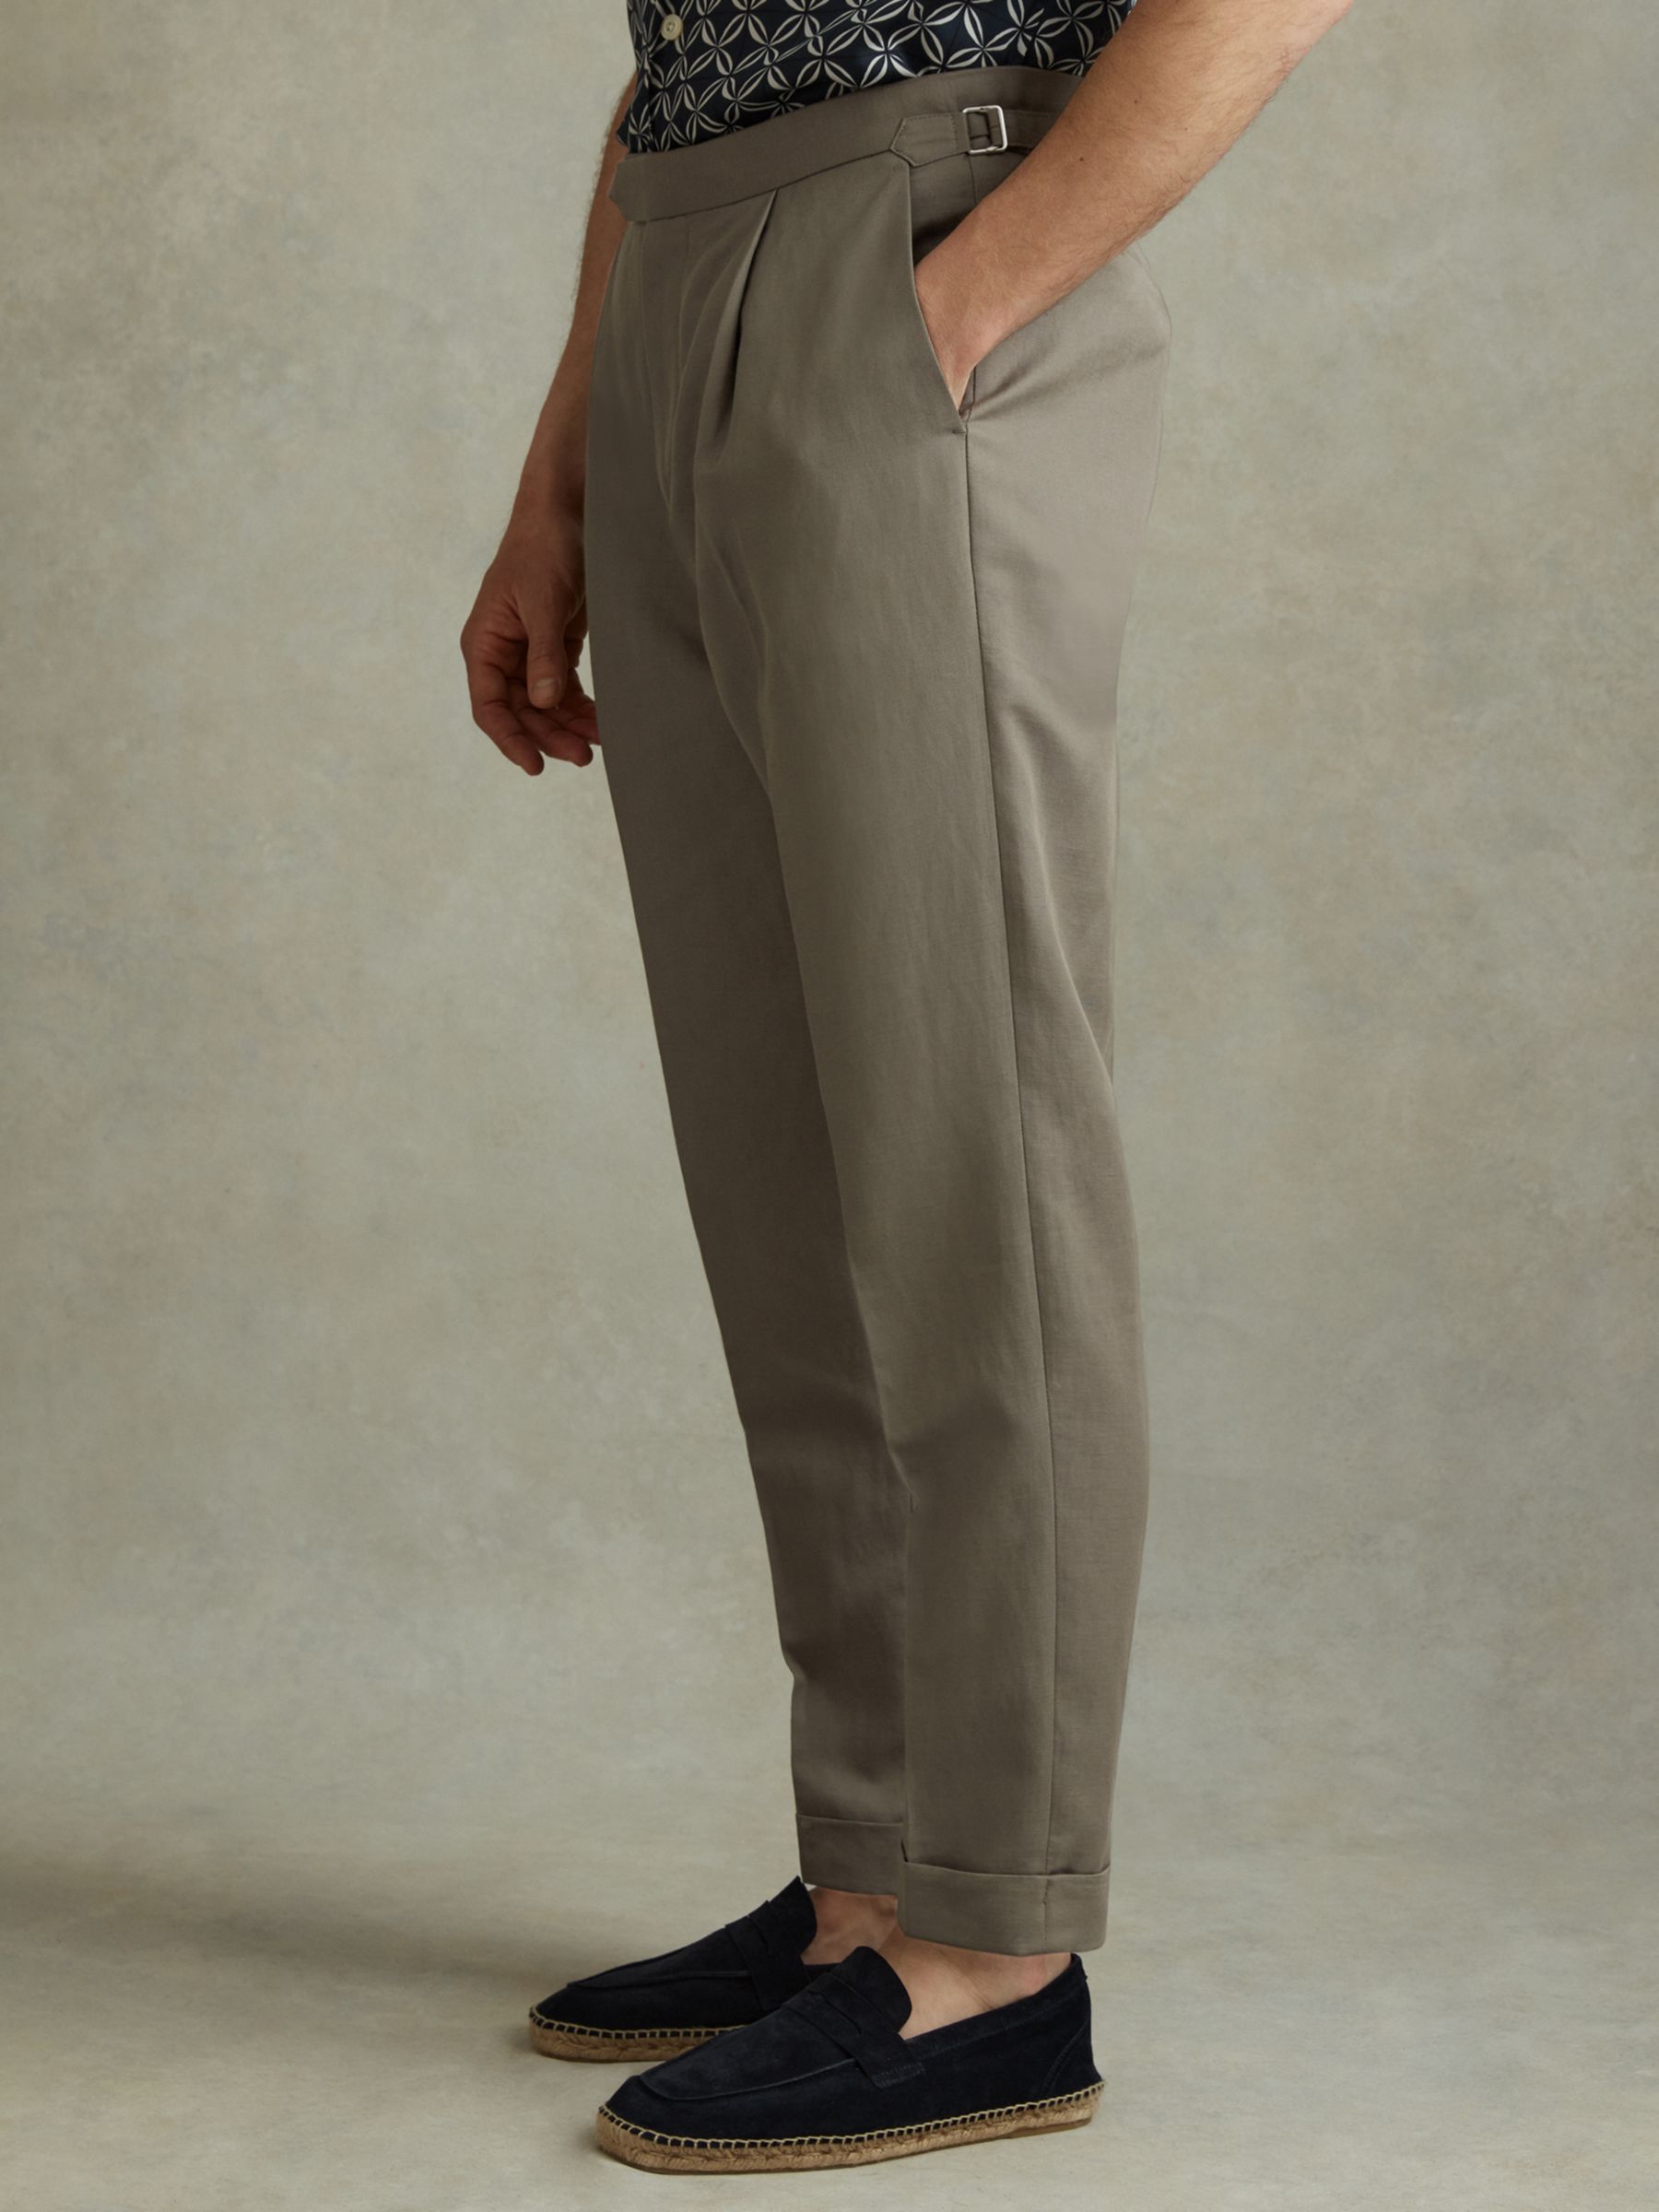 Reiss Com Linen Blend Trousers, Light Khaki, 28R